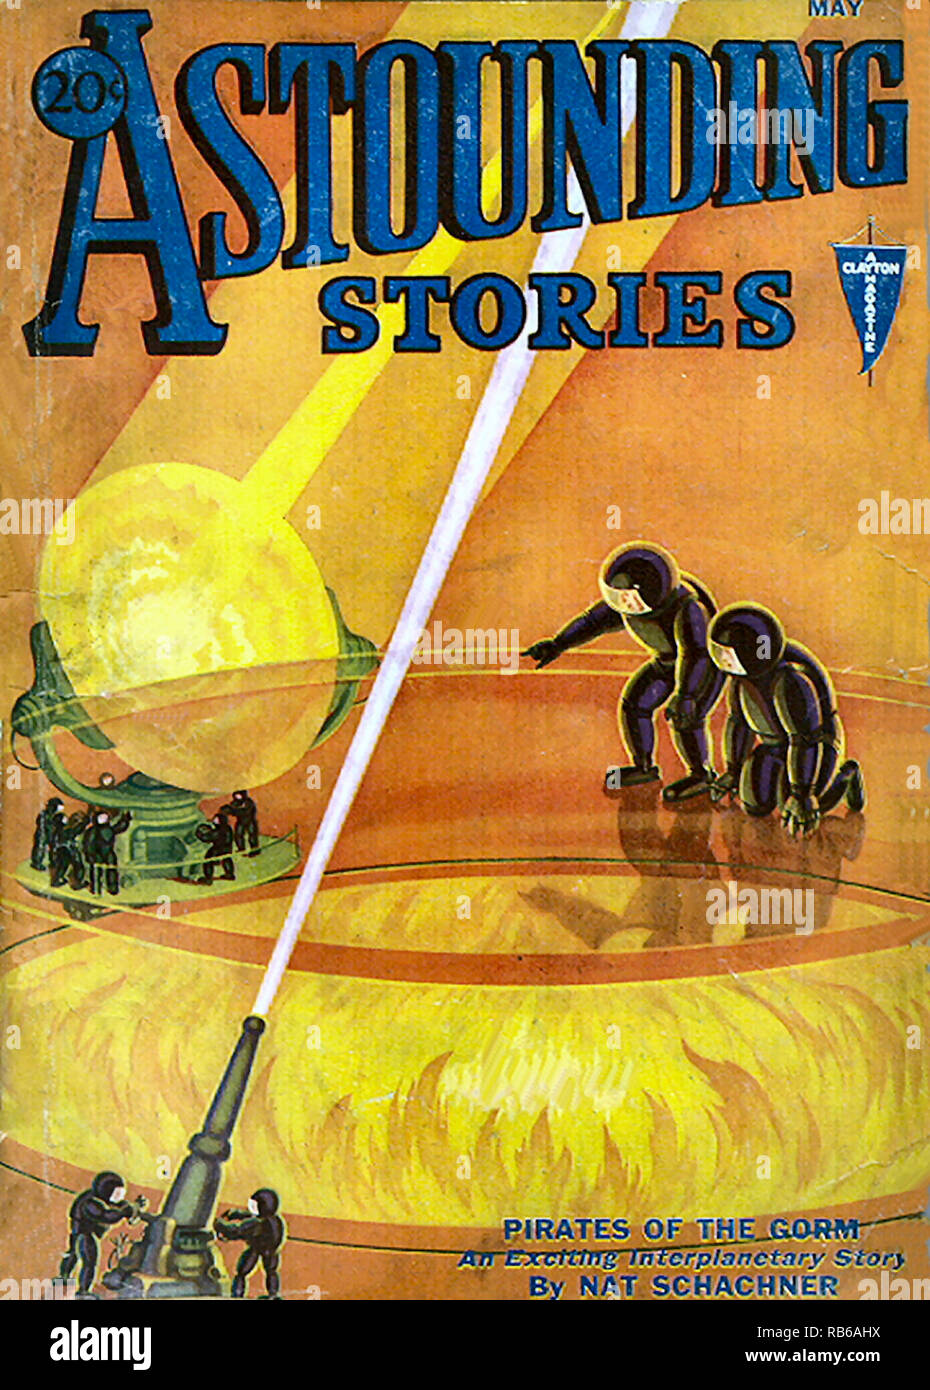 Astounding Stories # 29 May 1932 Stock Photo